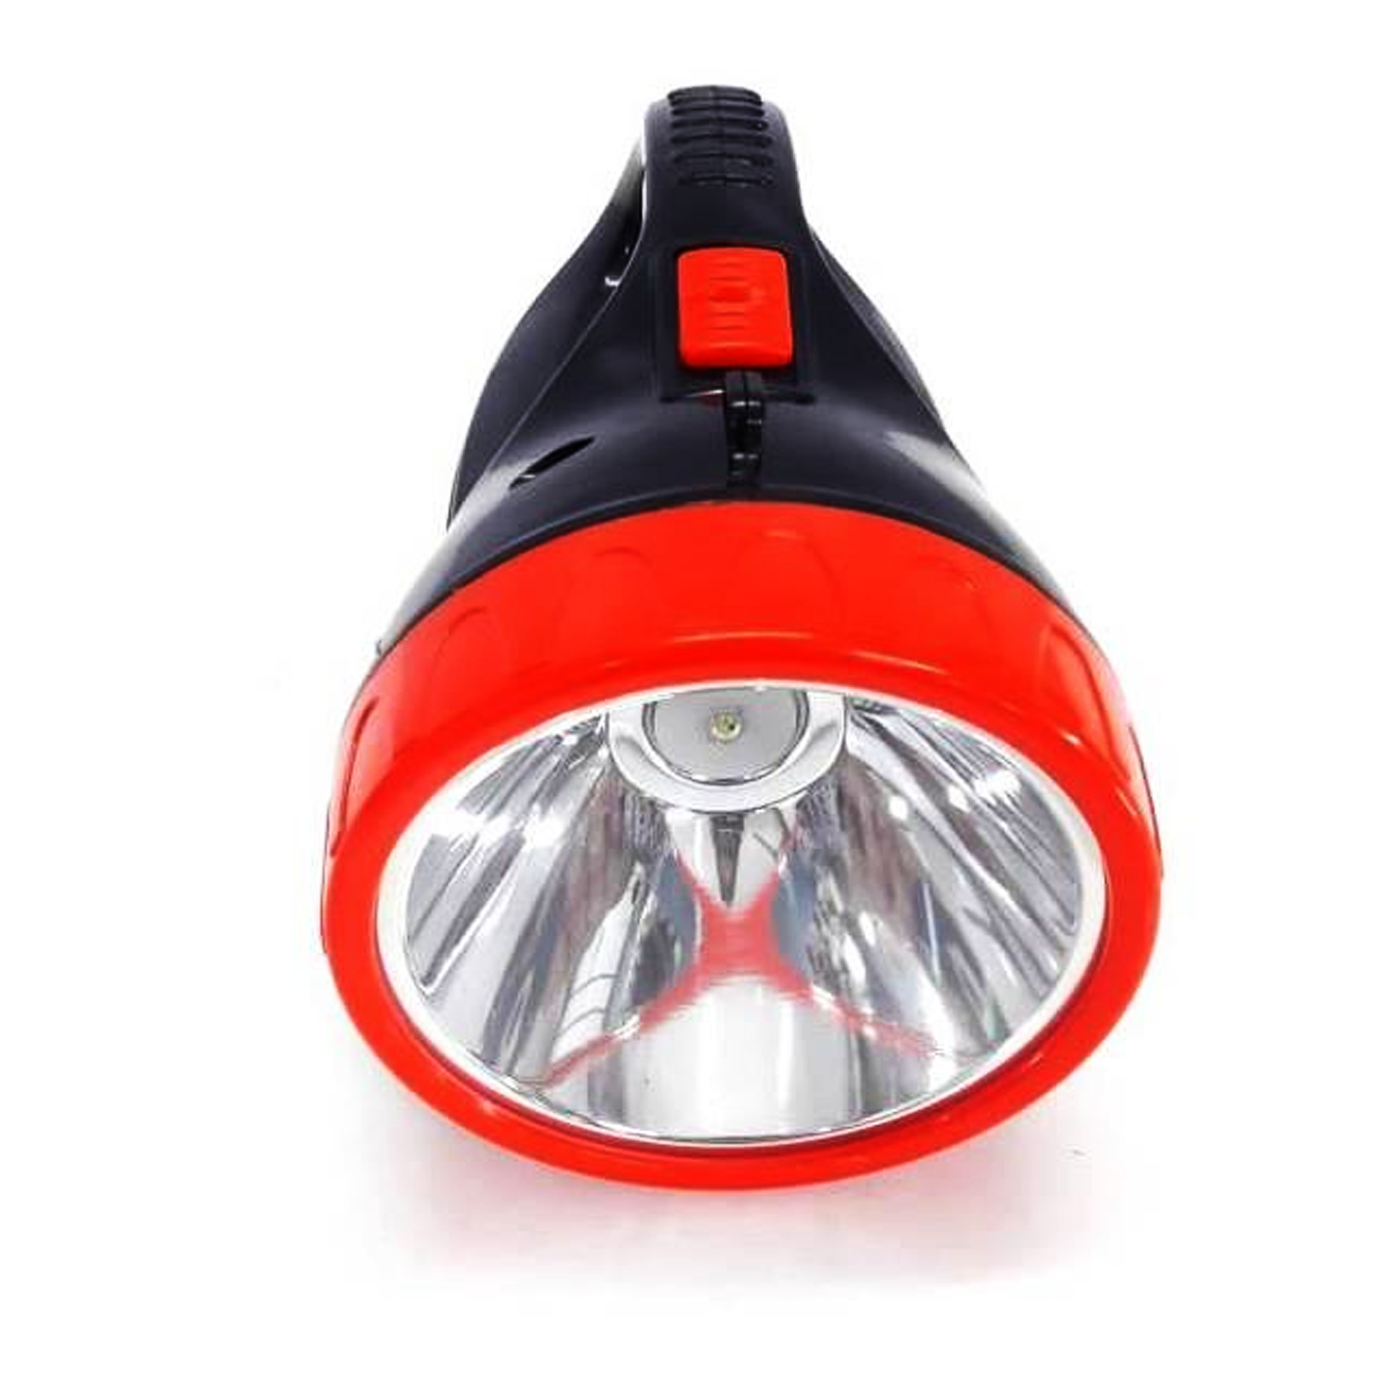 Detec™ 5 Watt Searchlight - Led Bulb - Rechargeable Search Light / Torch (Model: DSL-001) 